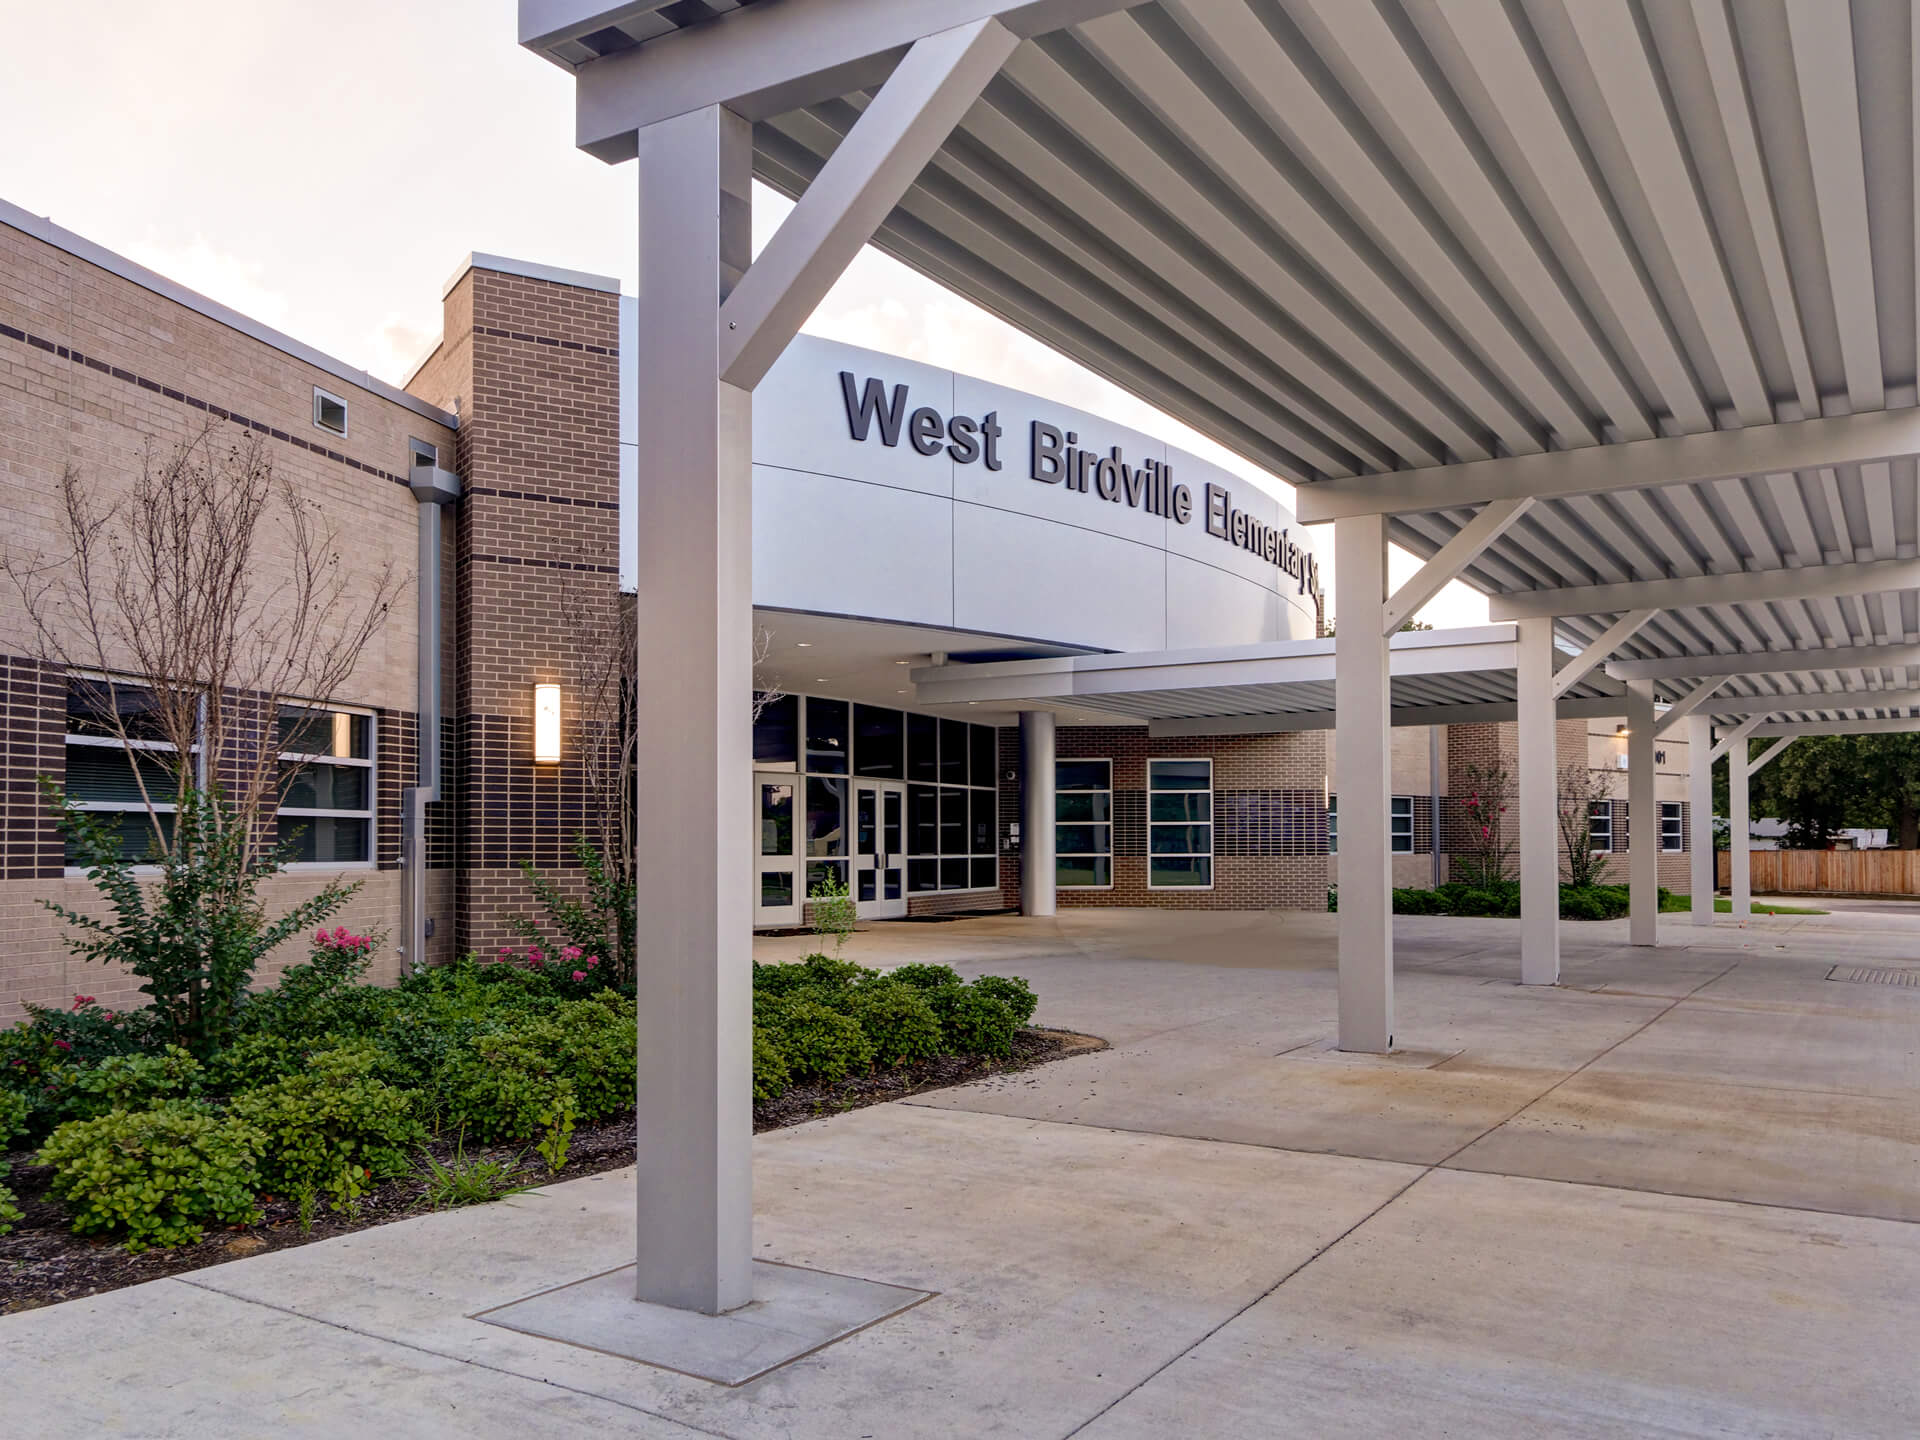 West Birdville Elementary School